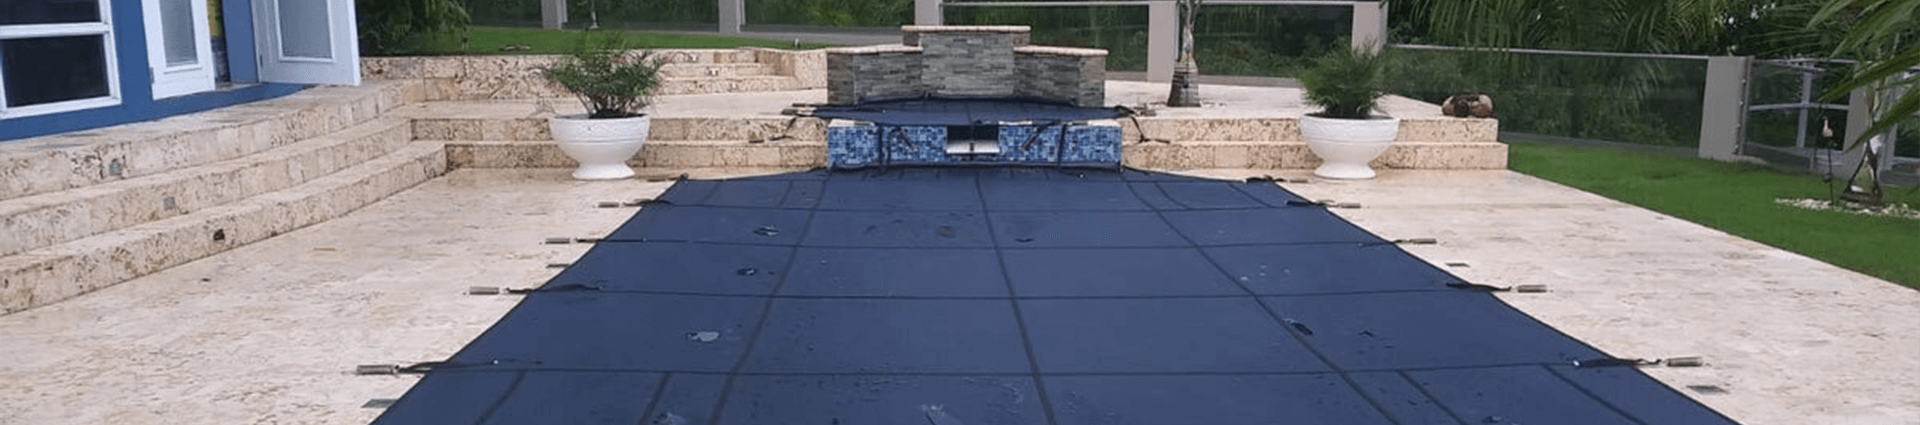 dark blue swimming pool cover